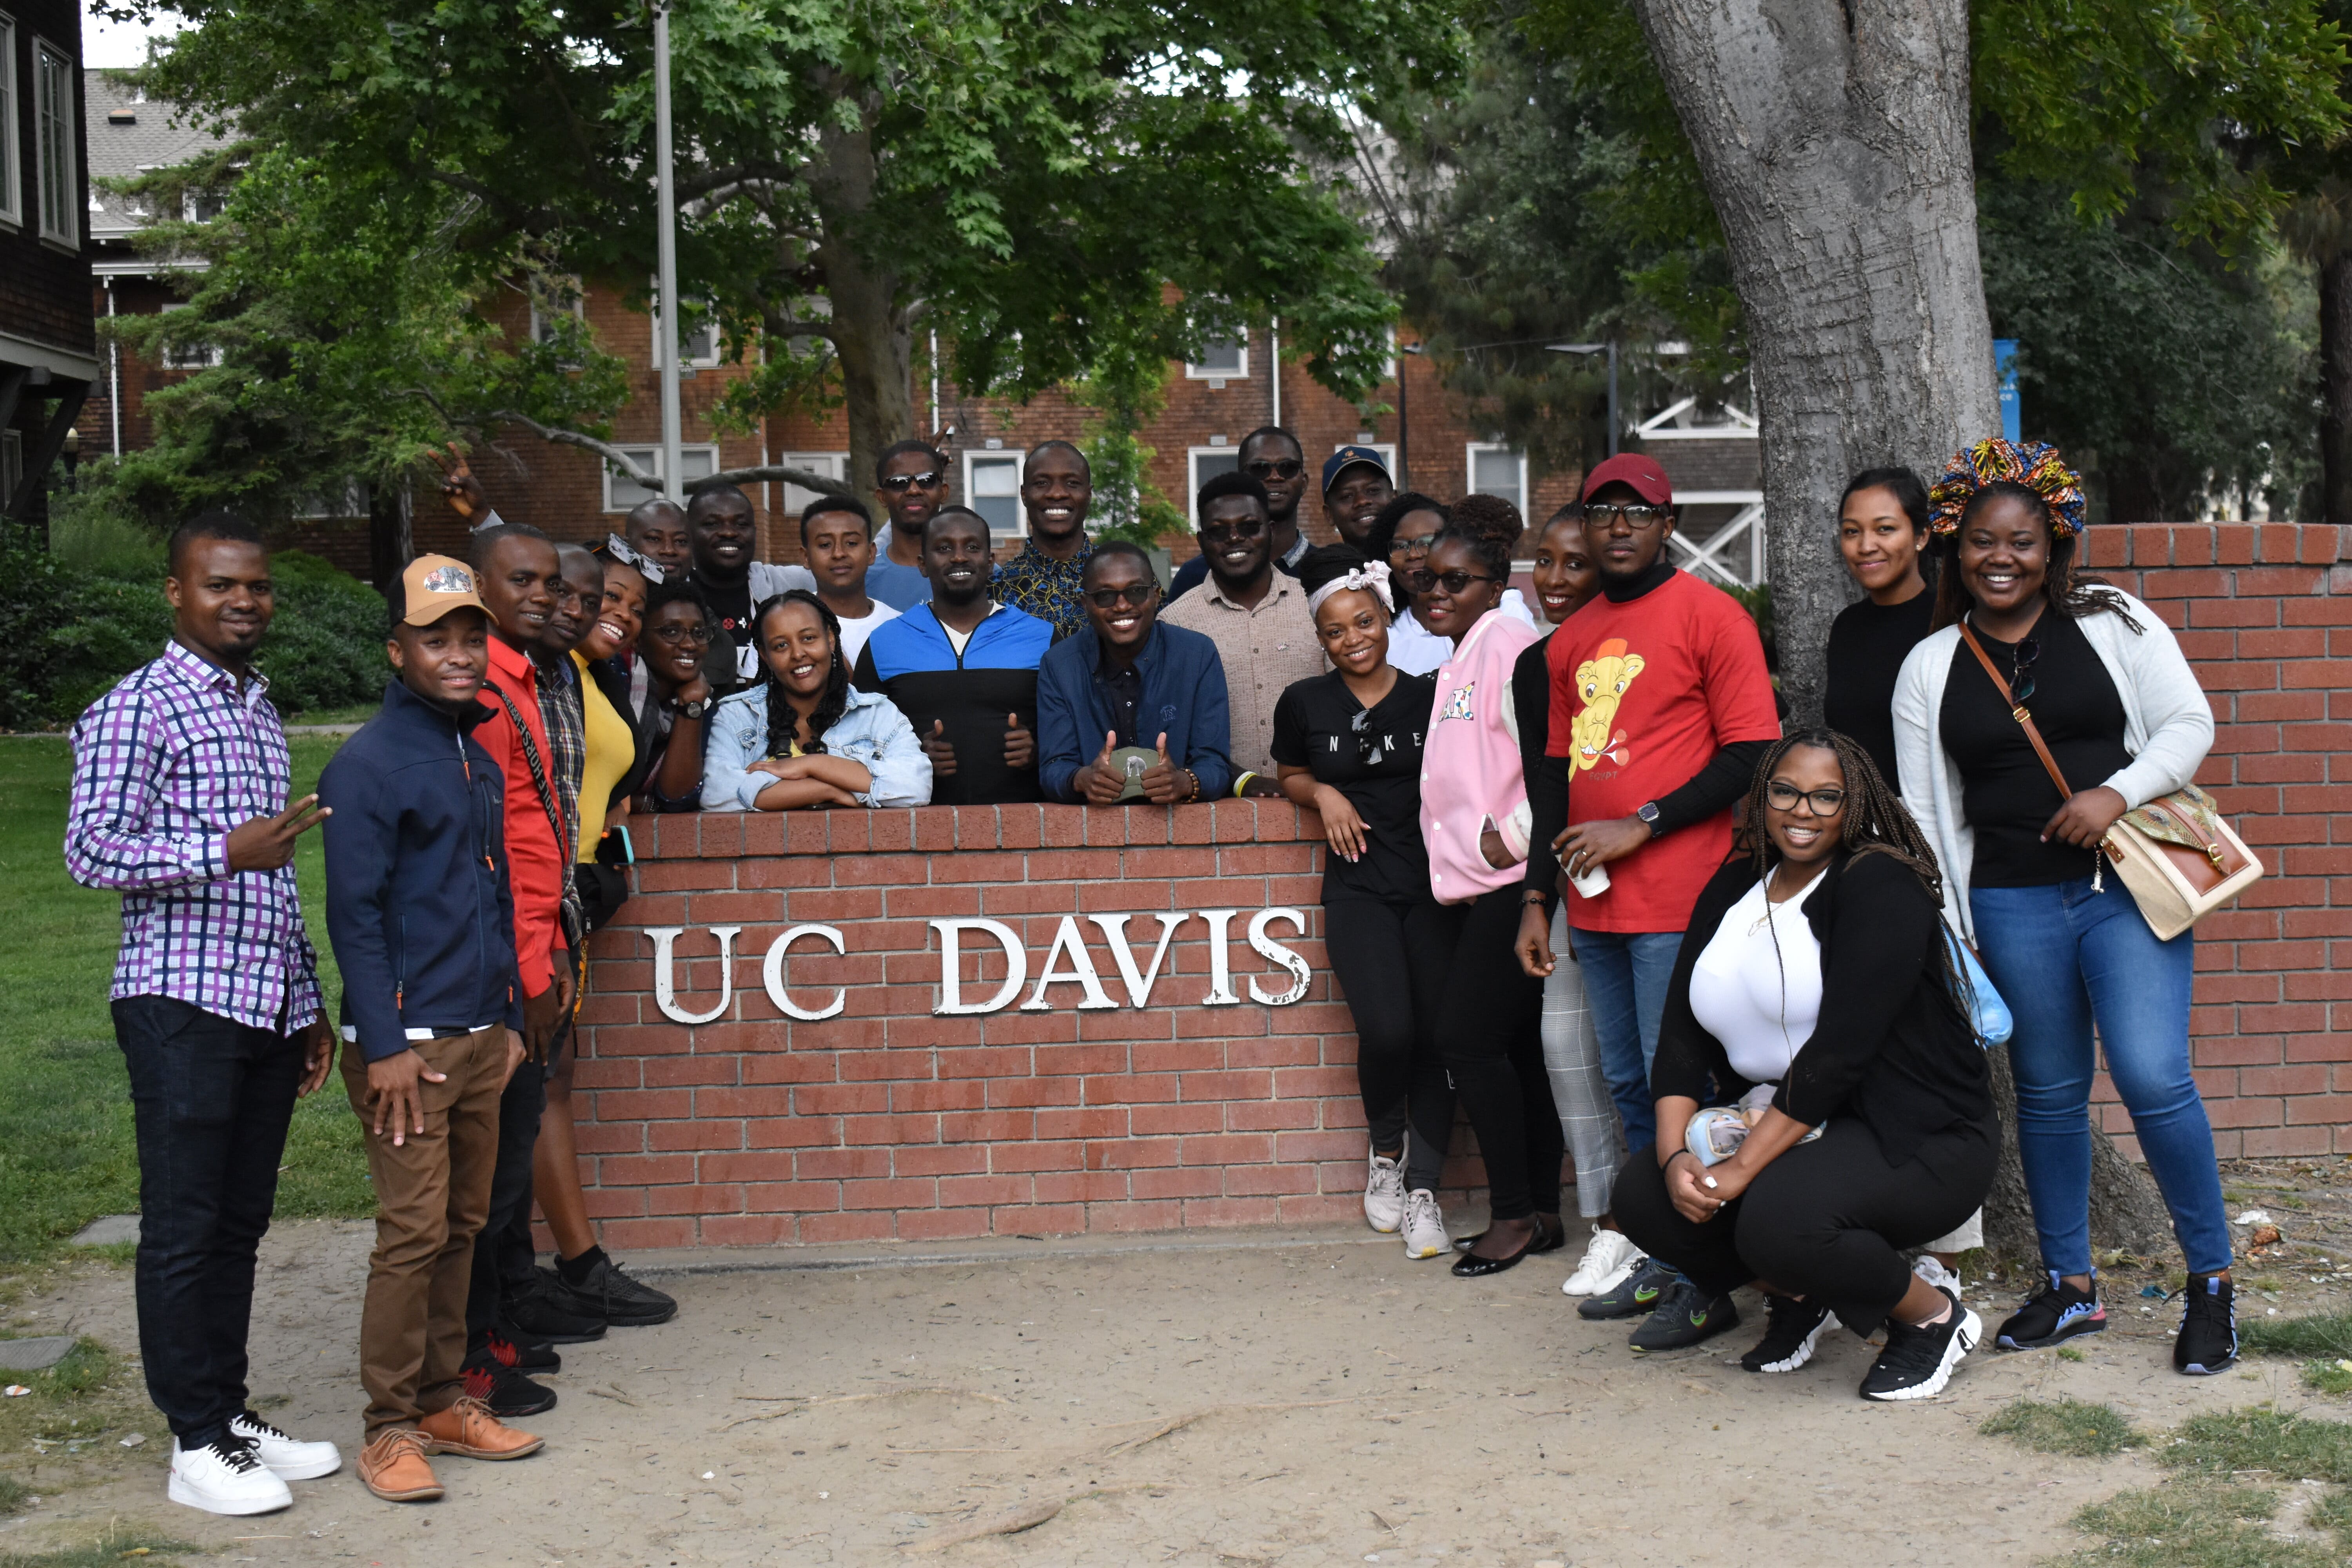 The Fellows gather around a brick UC Davis welcome sign.